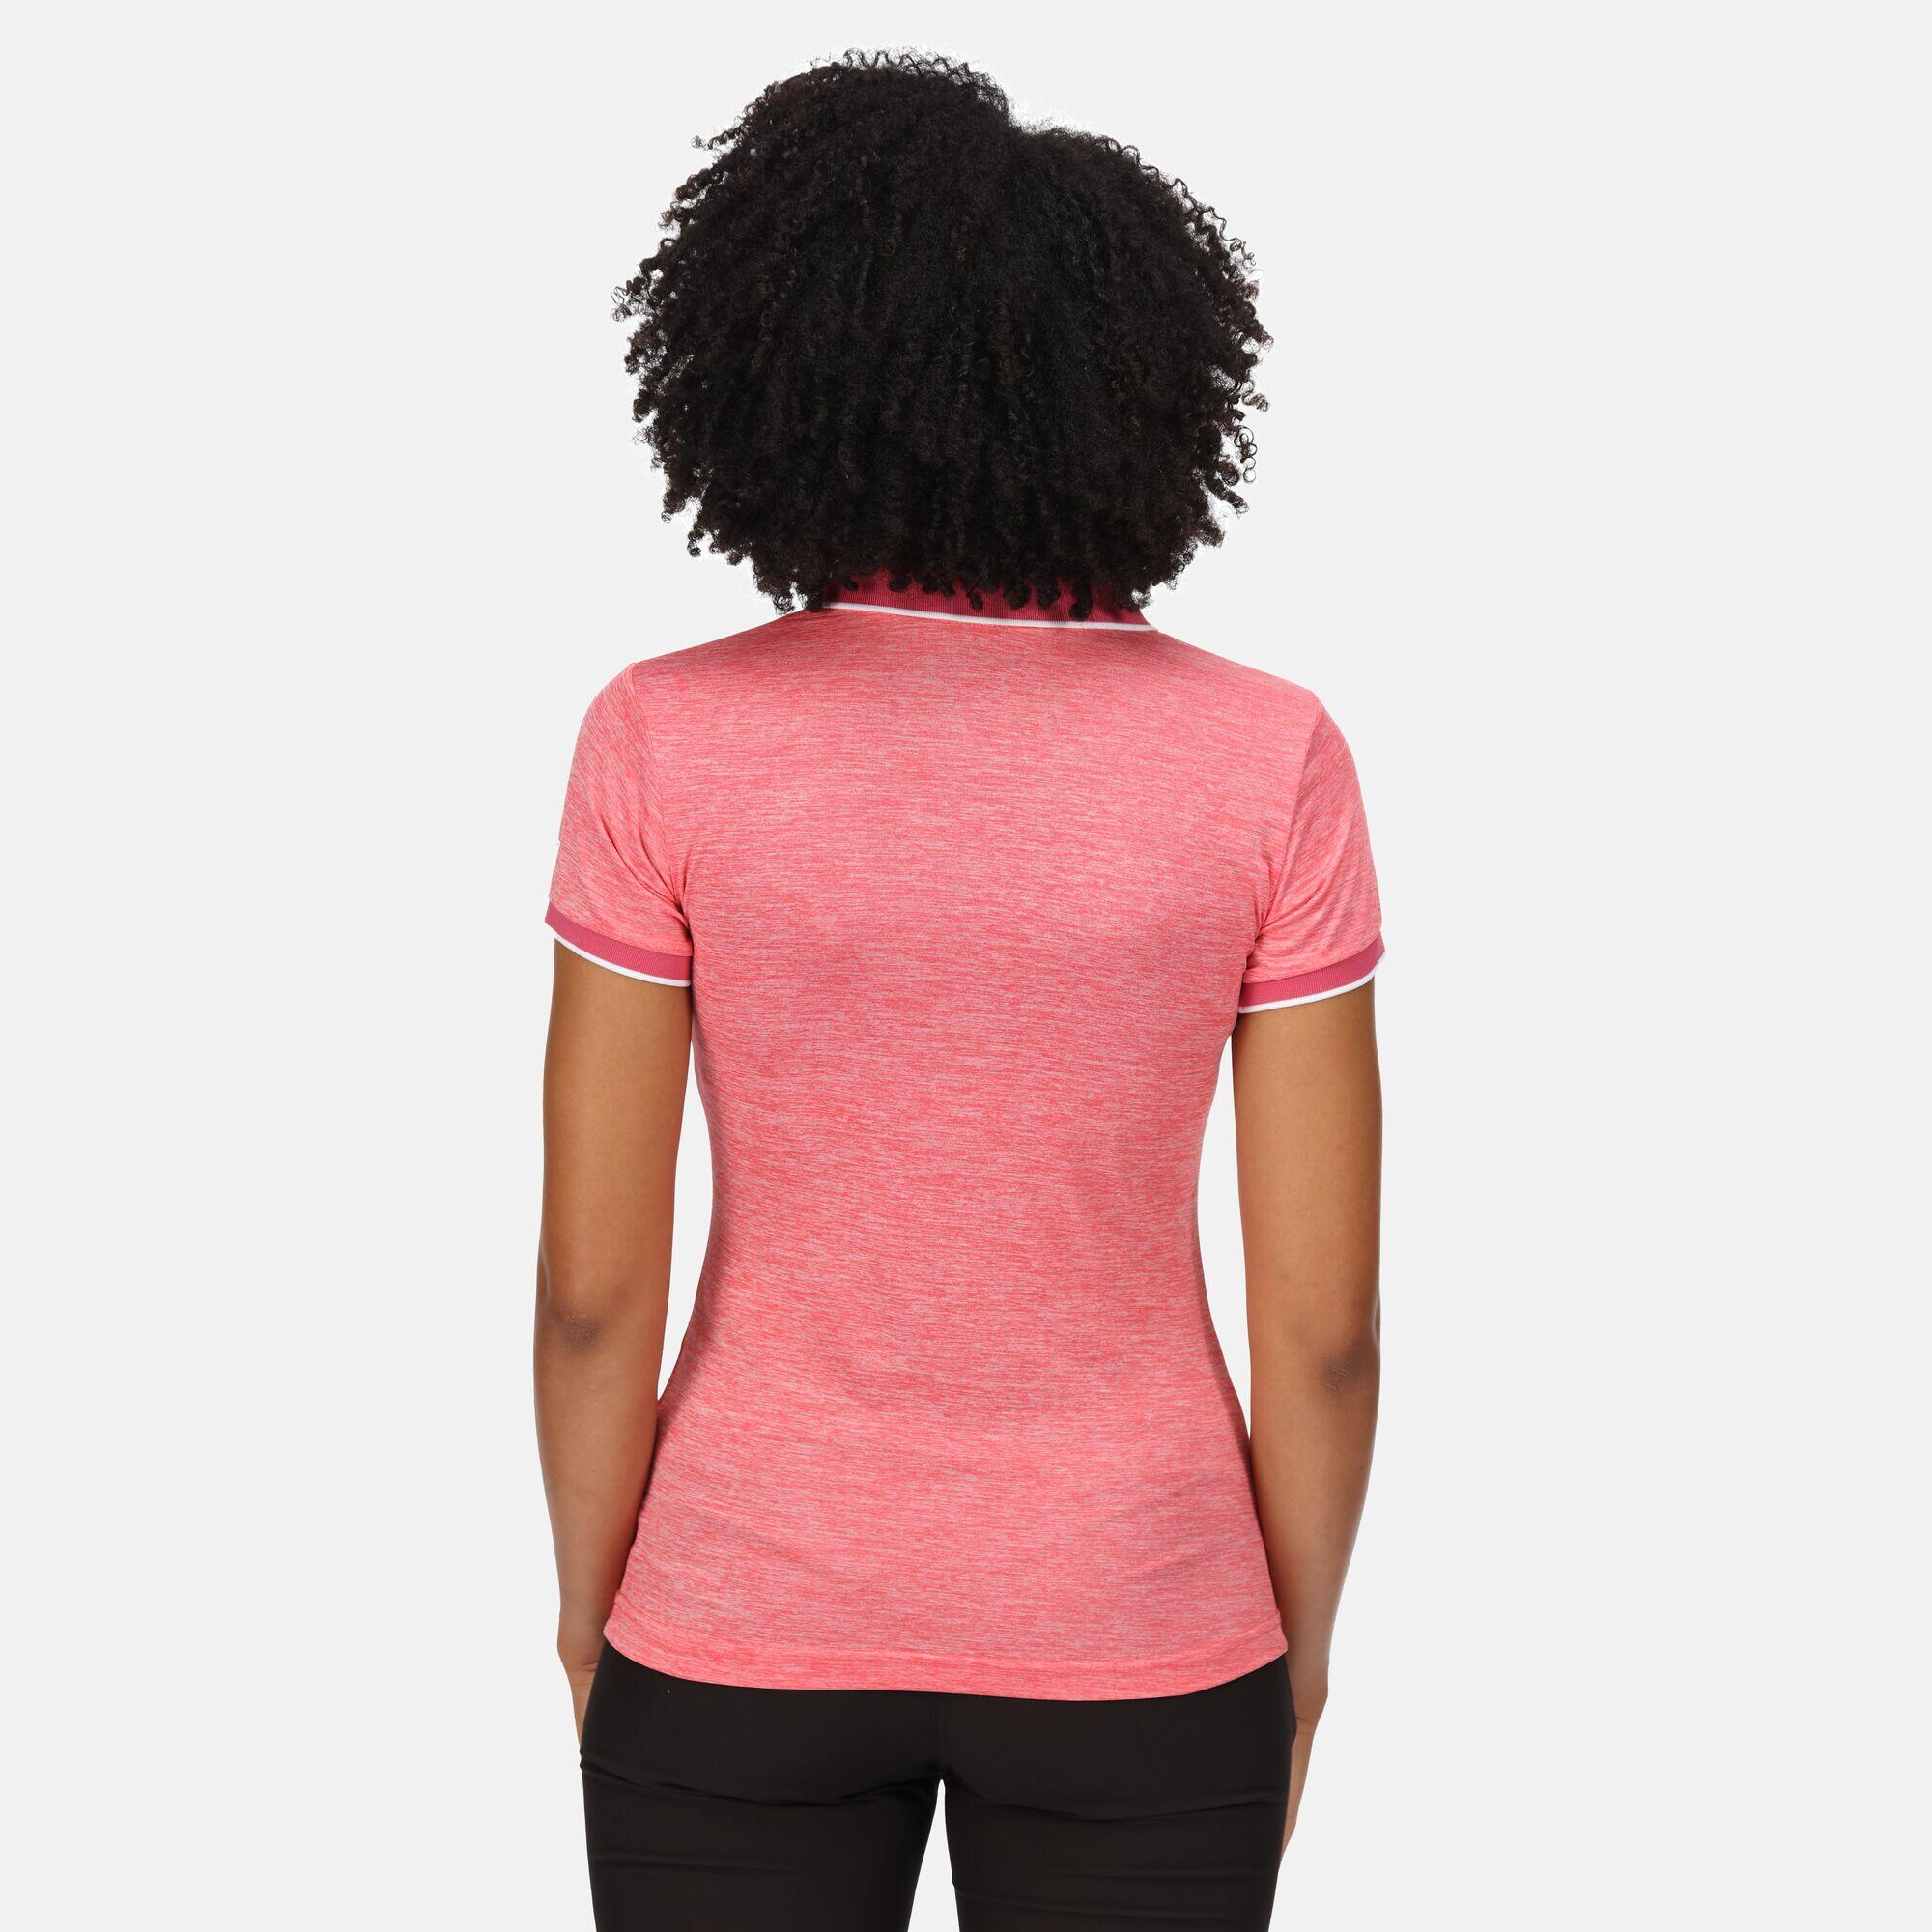 Remex II Women's Walking Short Sleeve T-Shirt - Tropical Pink 2/7